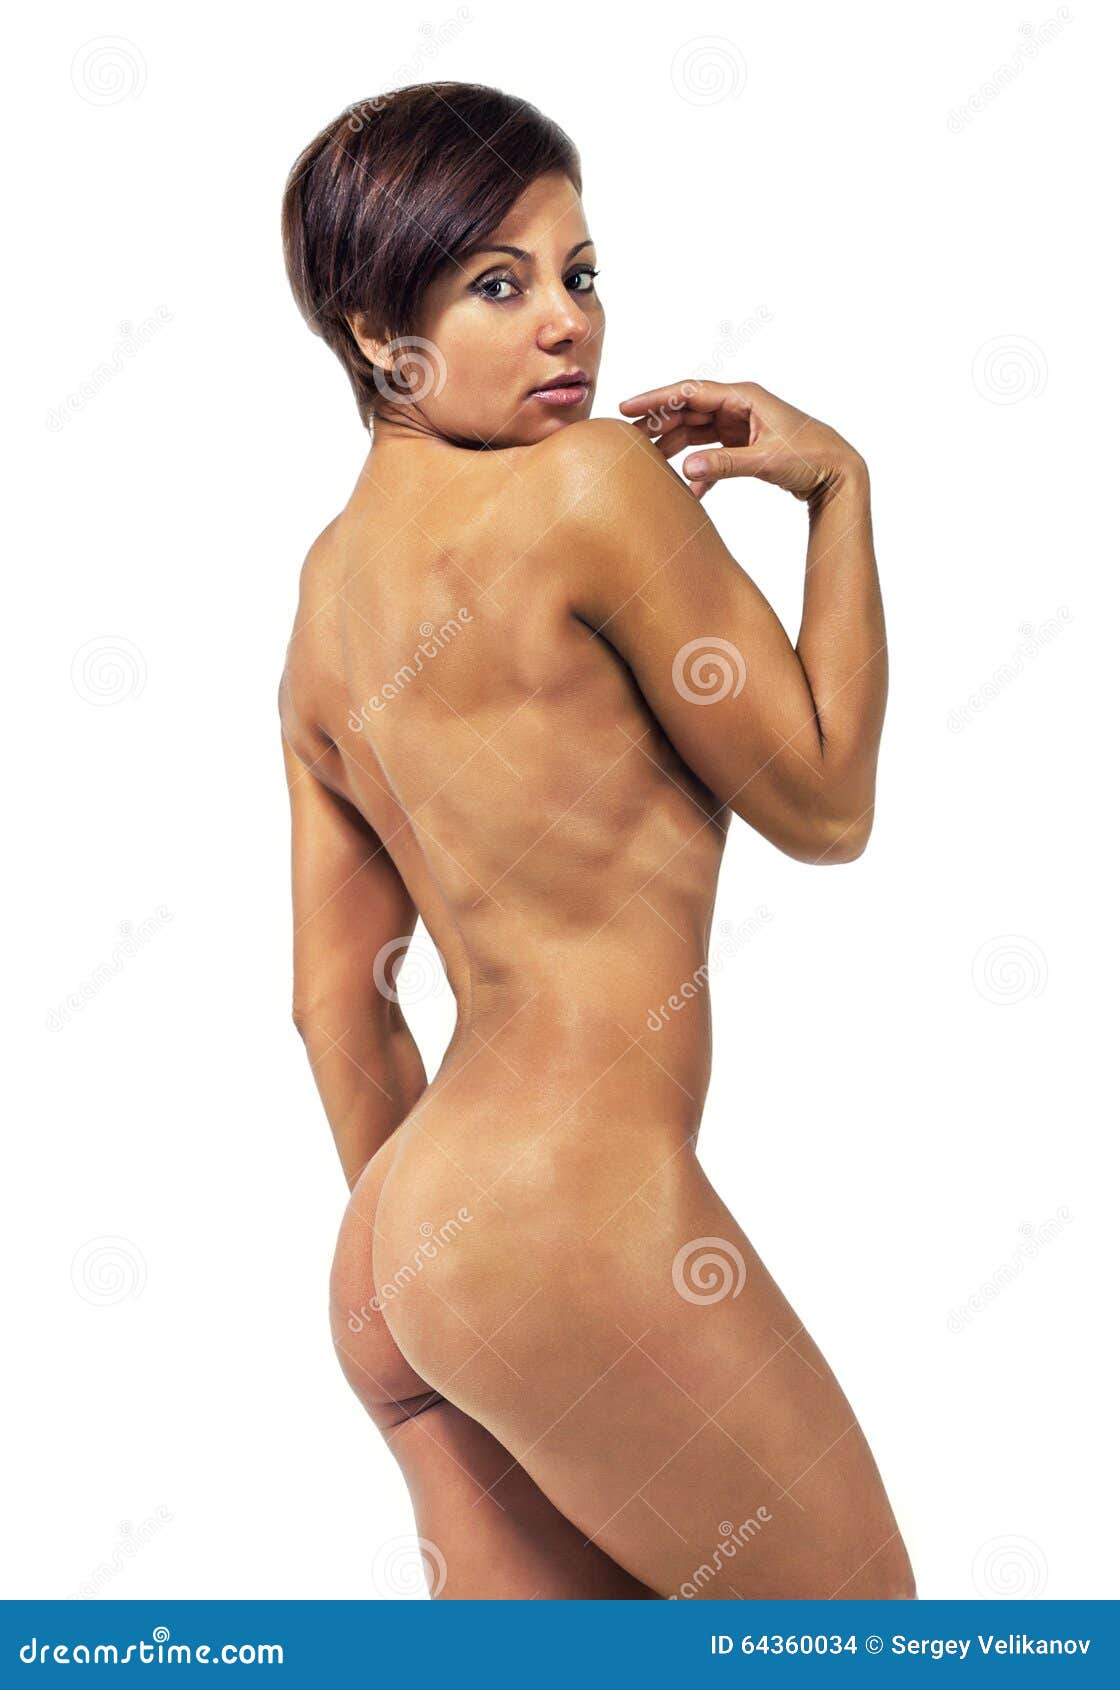 Sports women nude pics